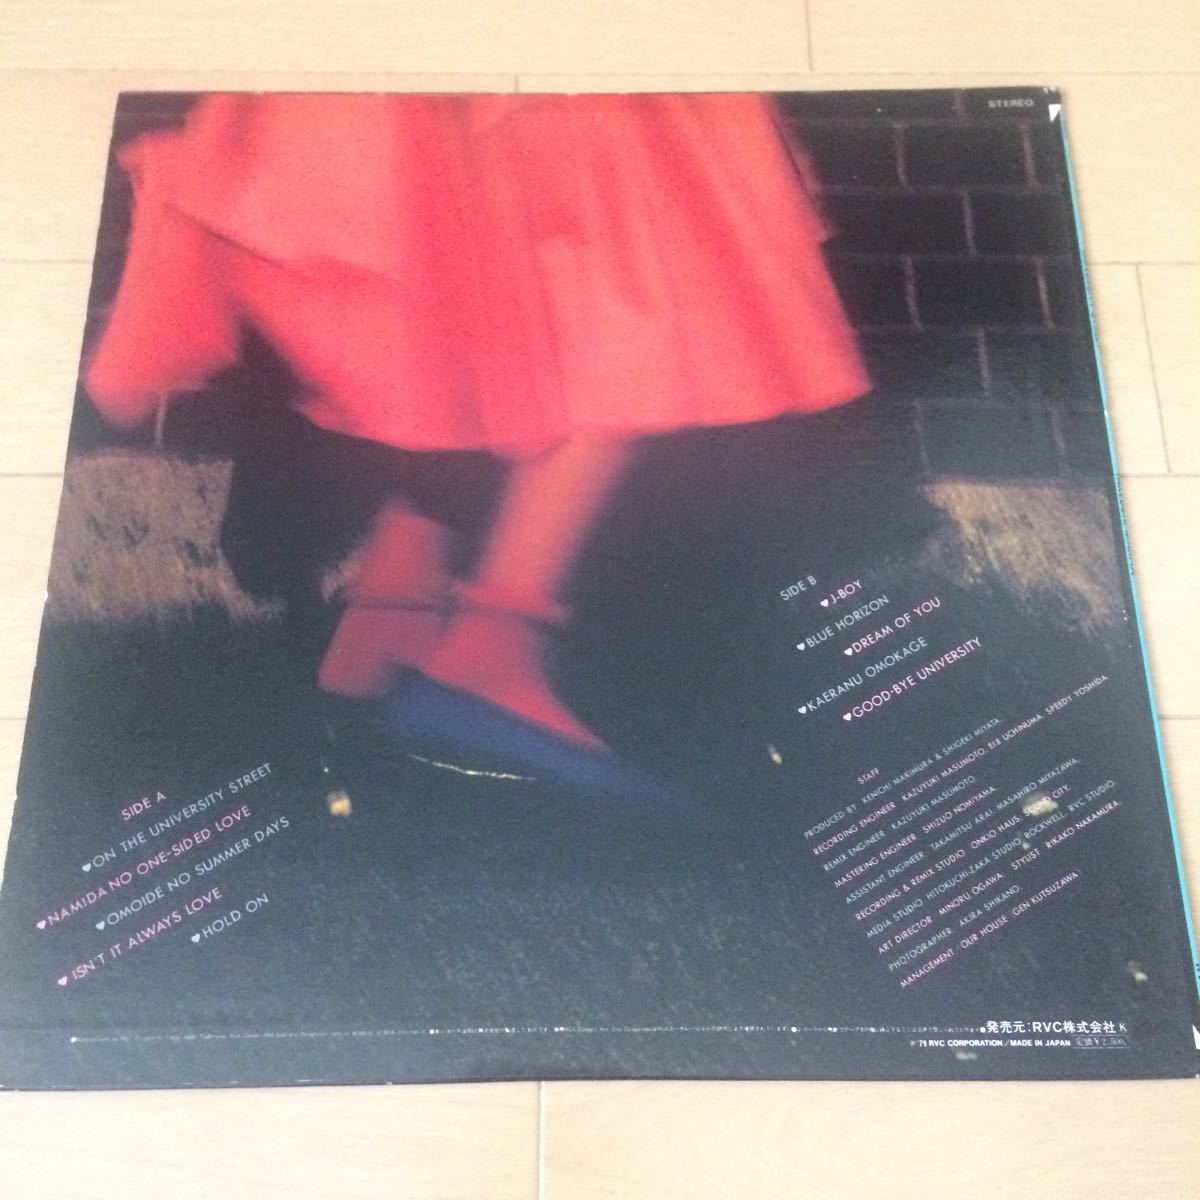 * Takeuchi Mariya UNIVERSITY STREET LP record 